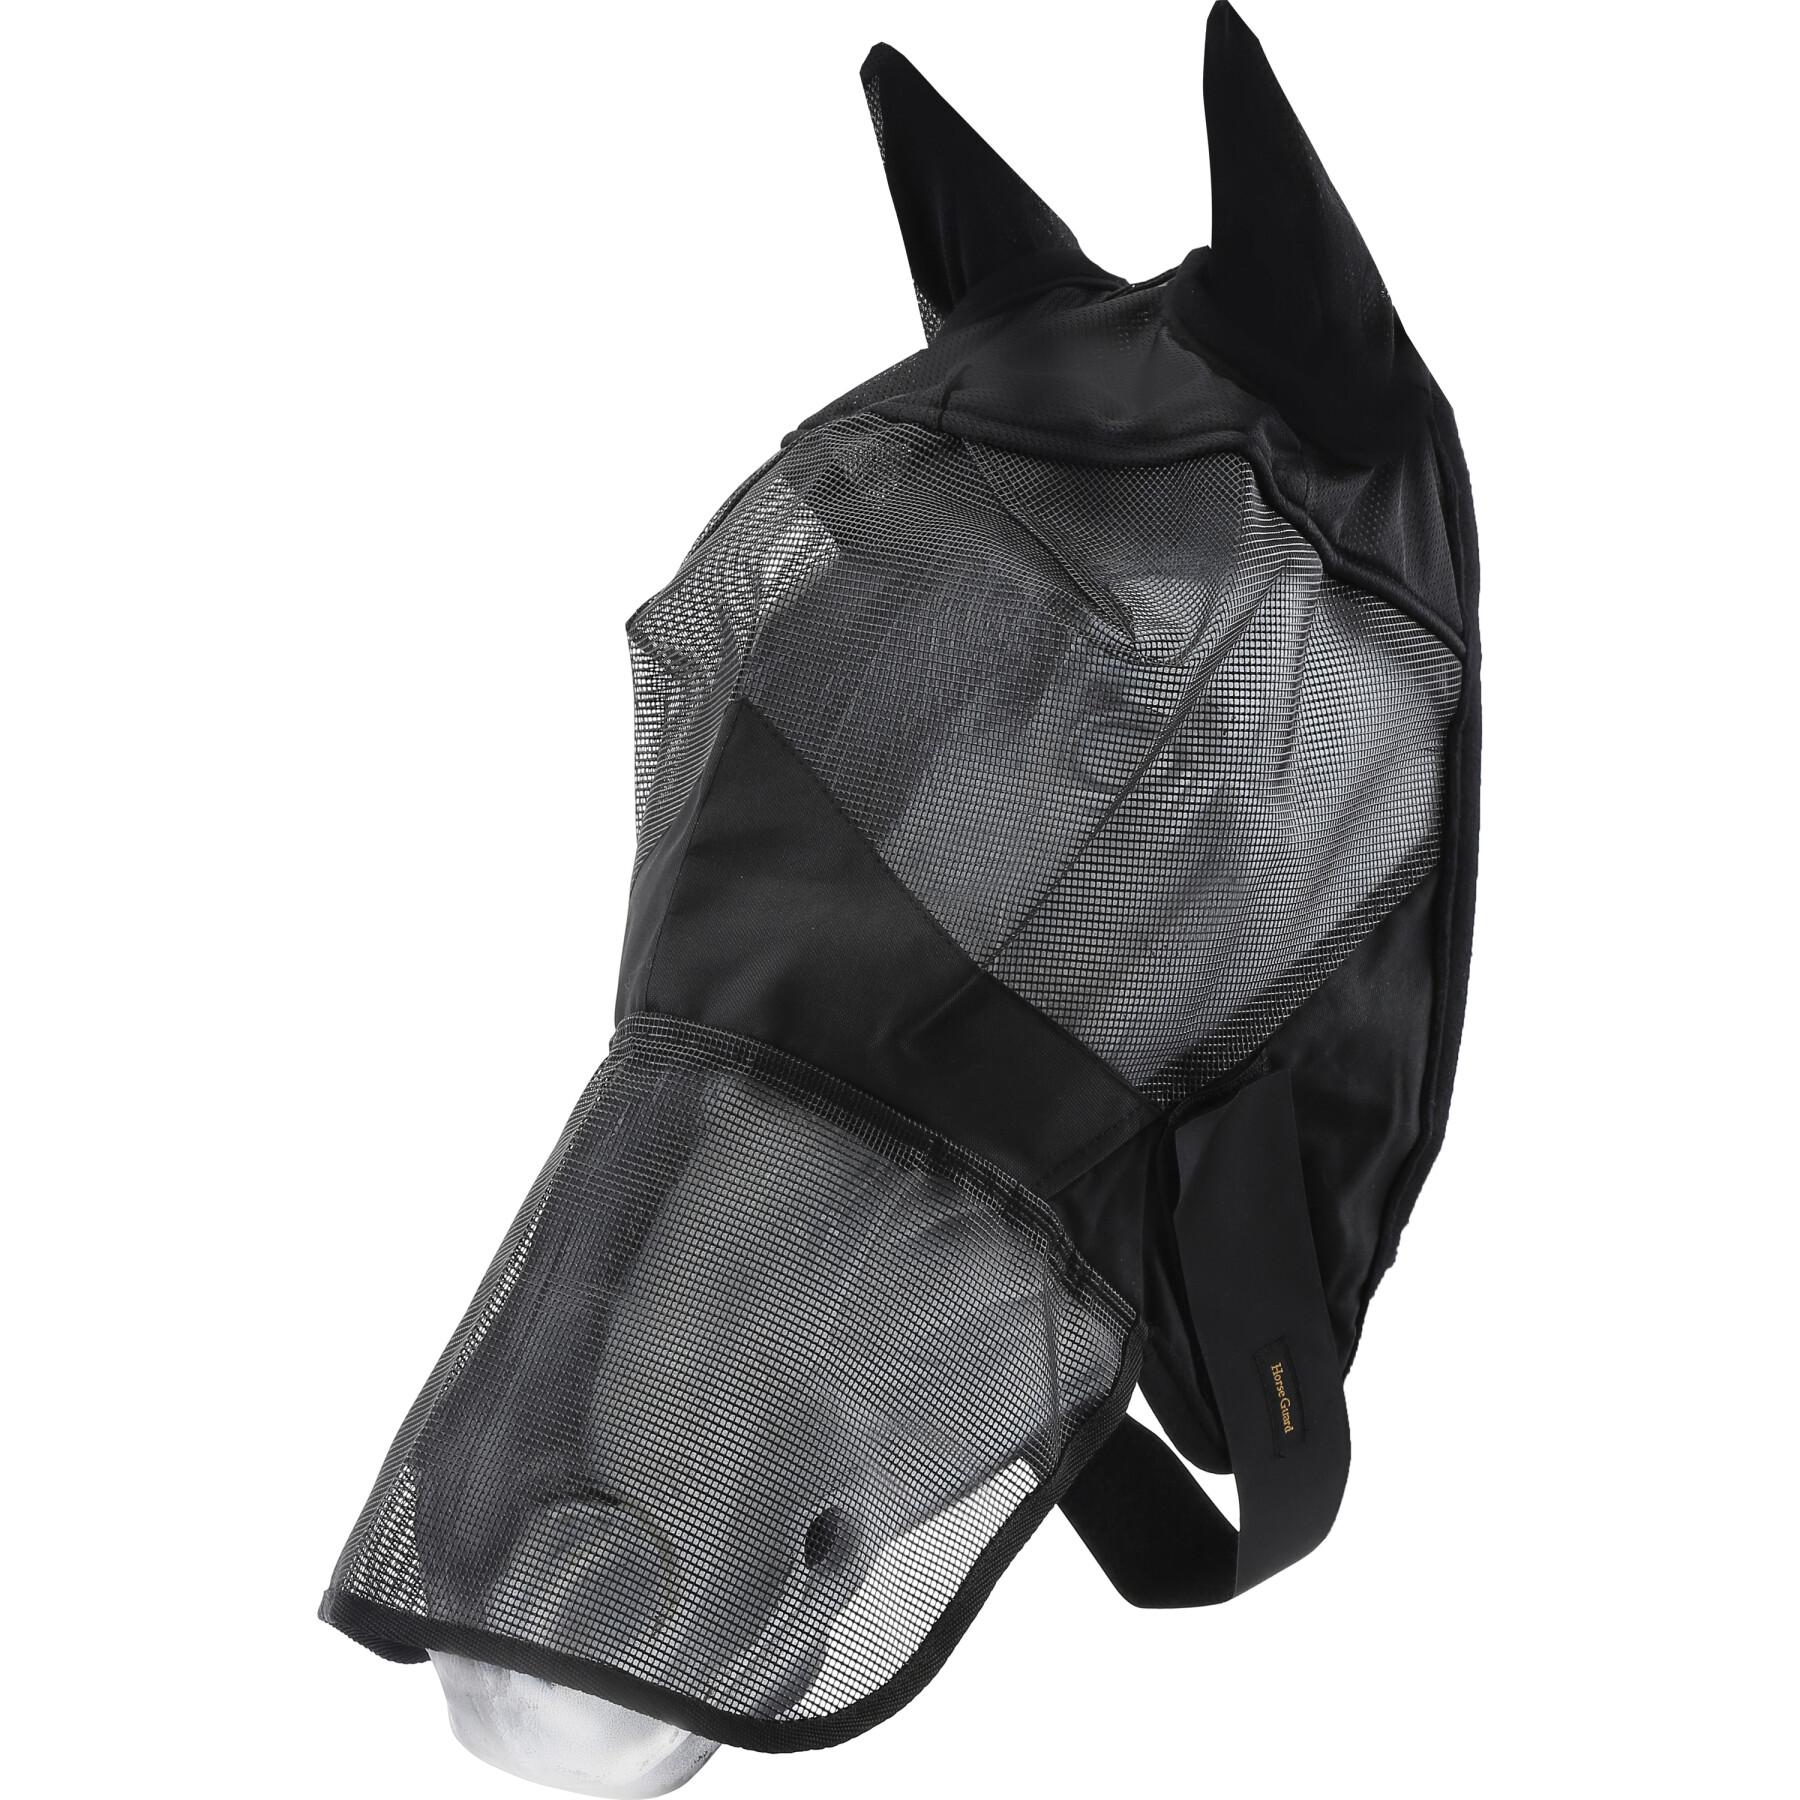 Paardenmasker met zacht neusstuk HorseGuard